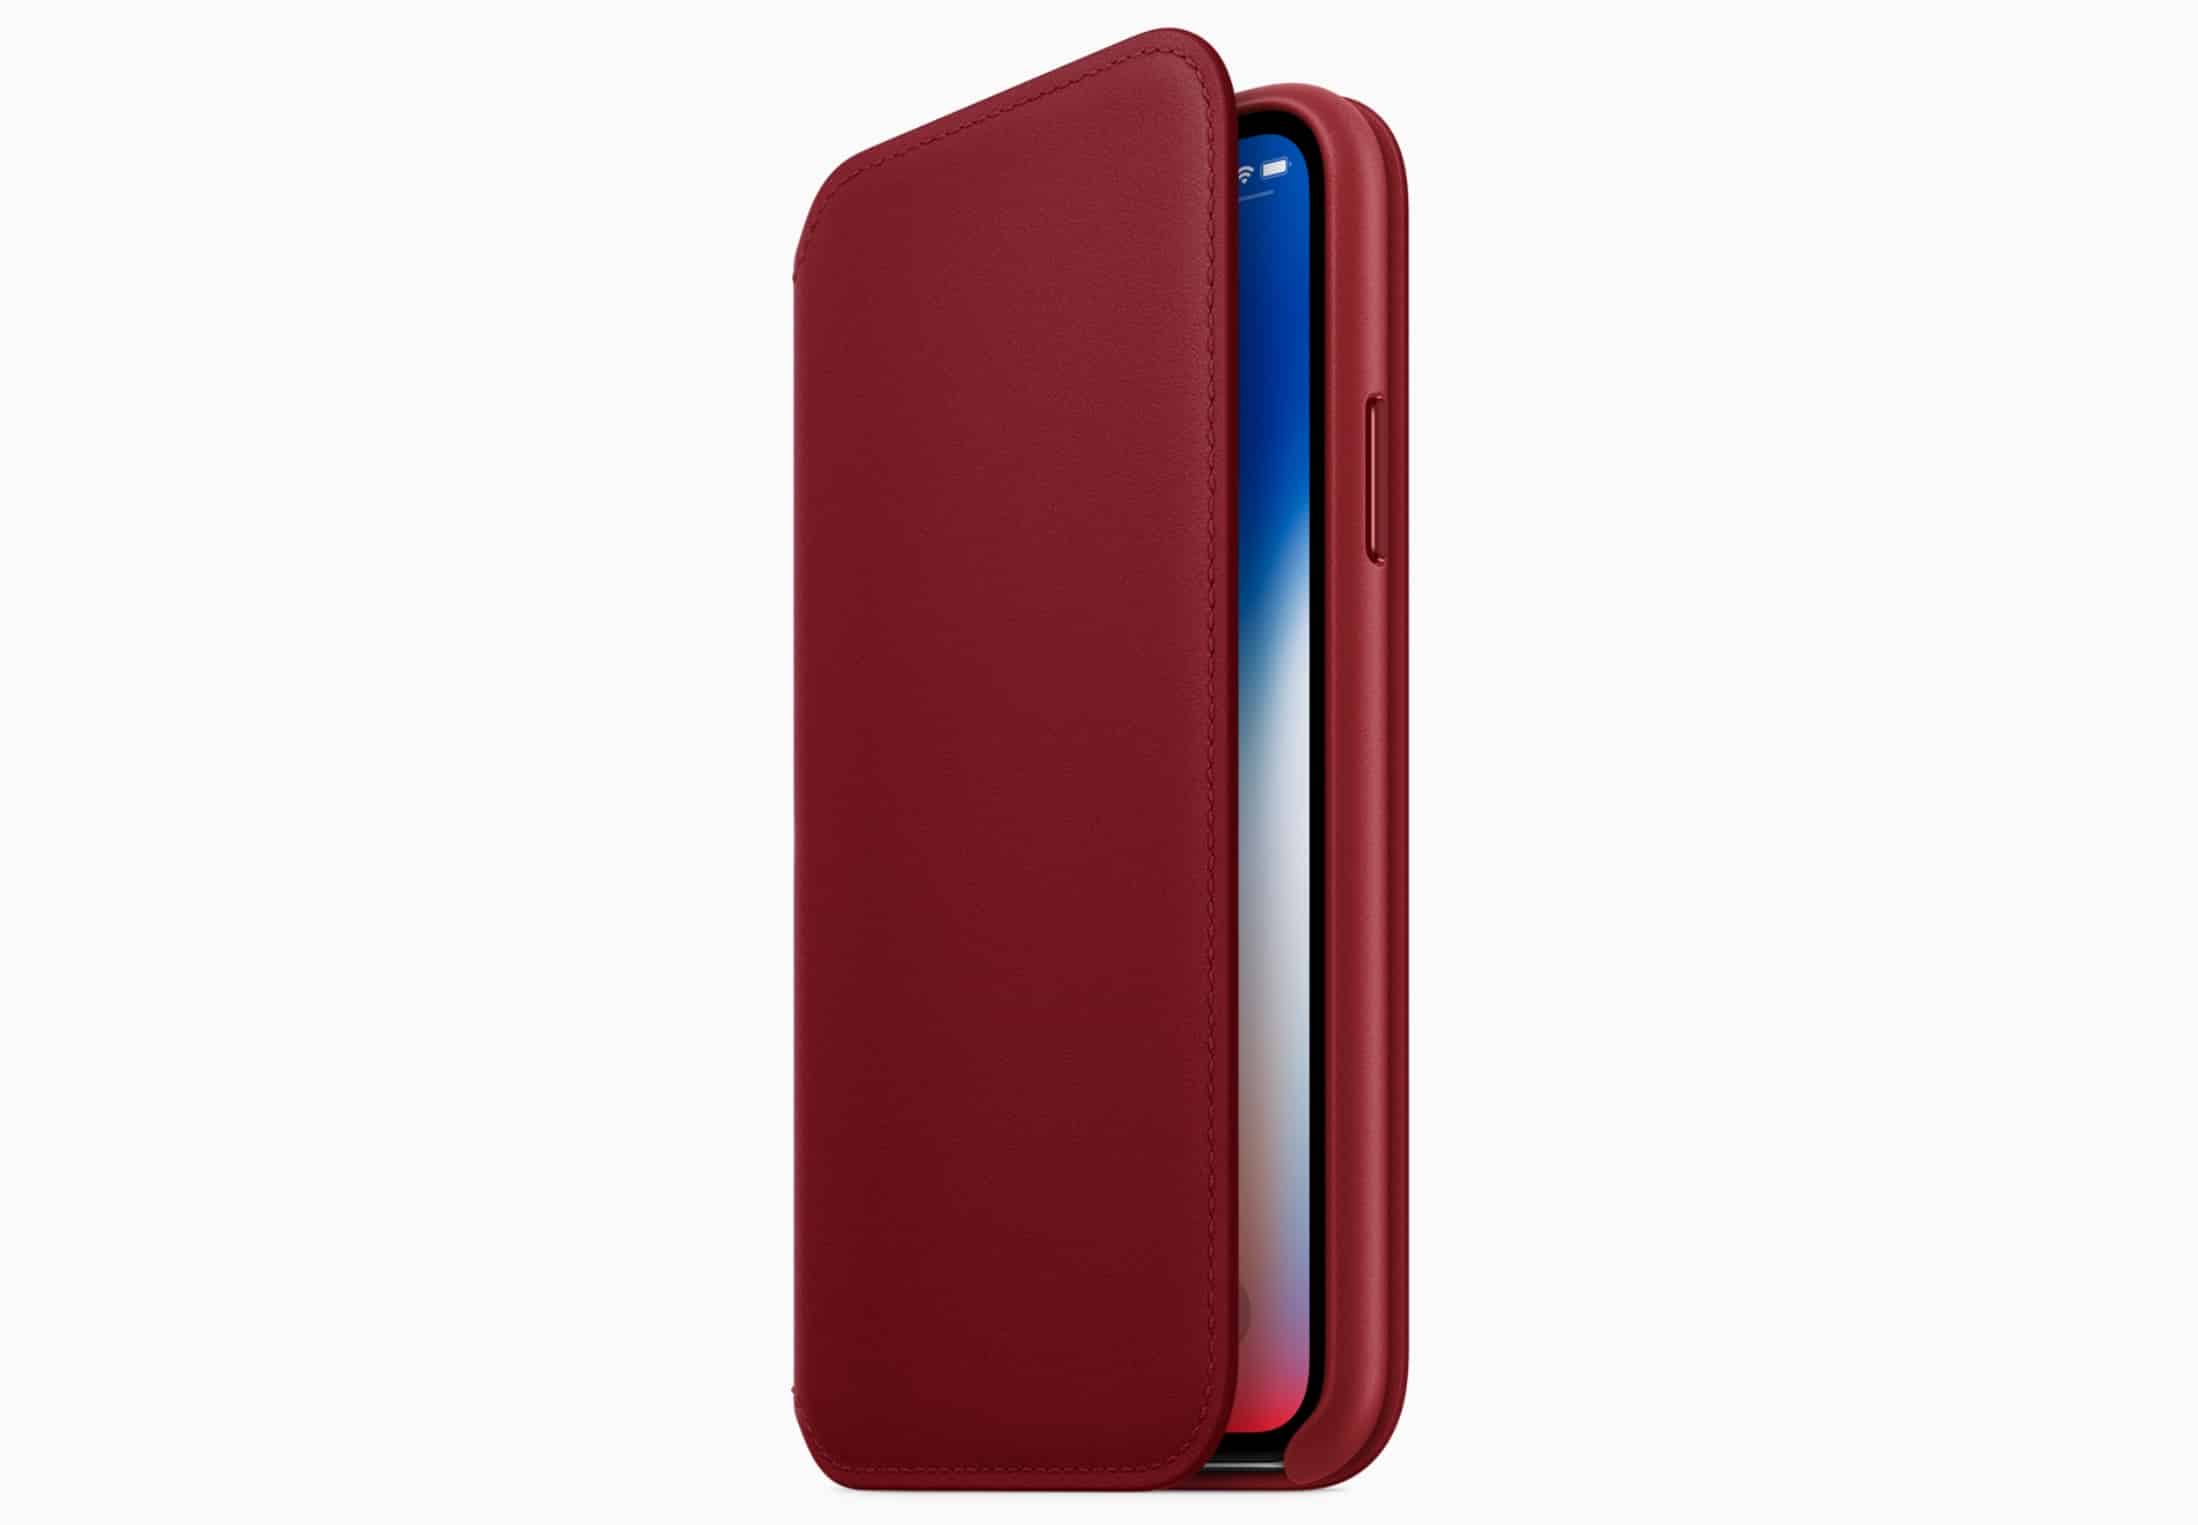 iPhone X RED leather folio